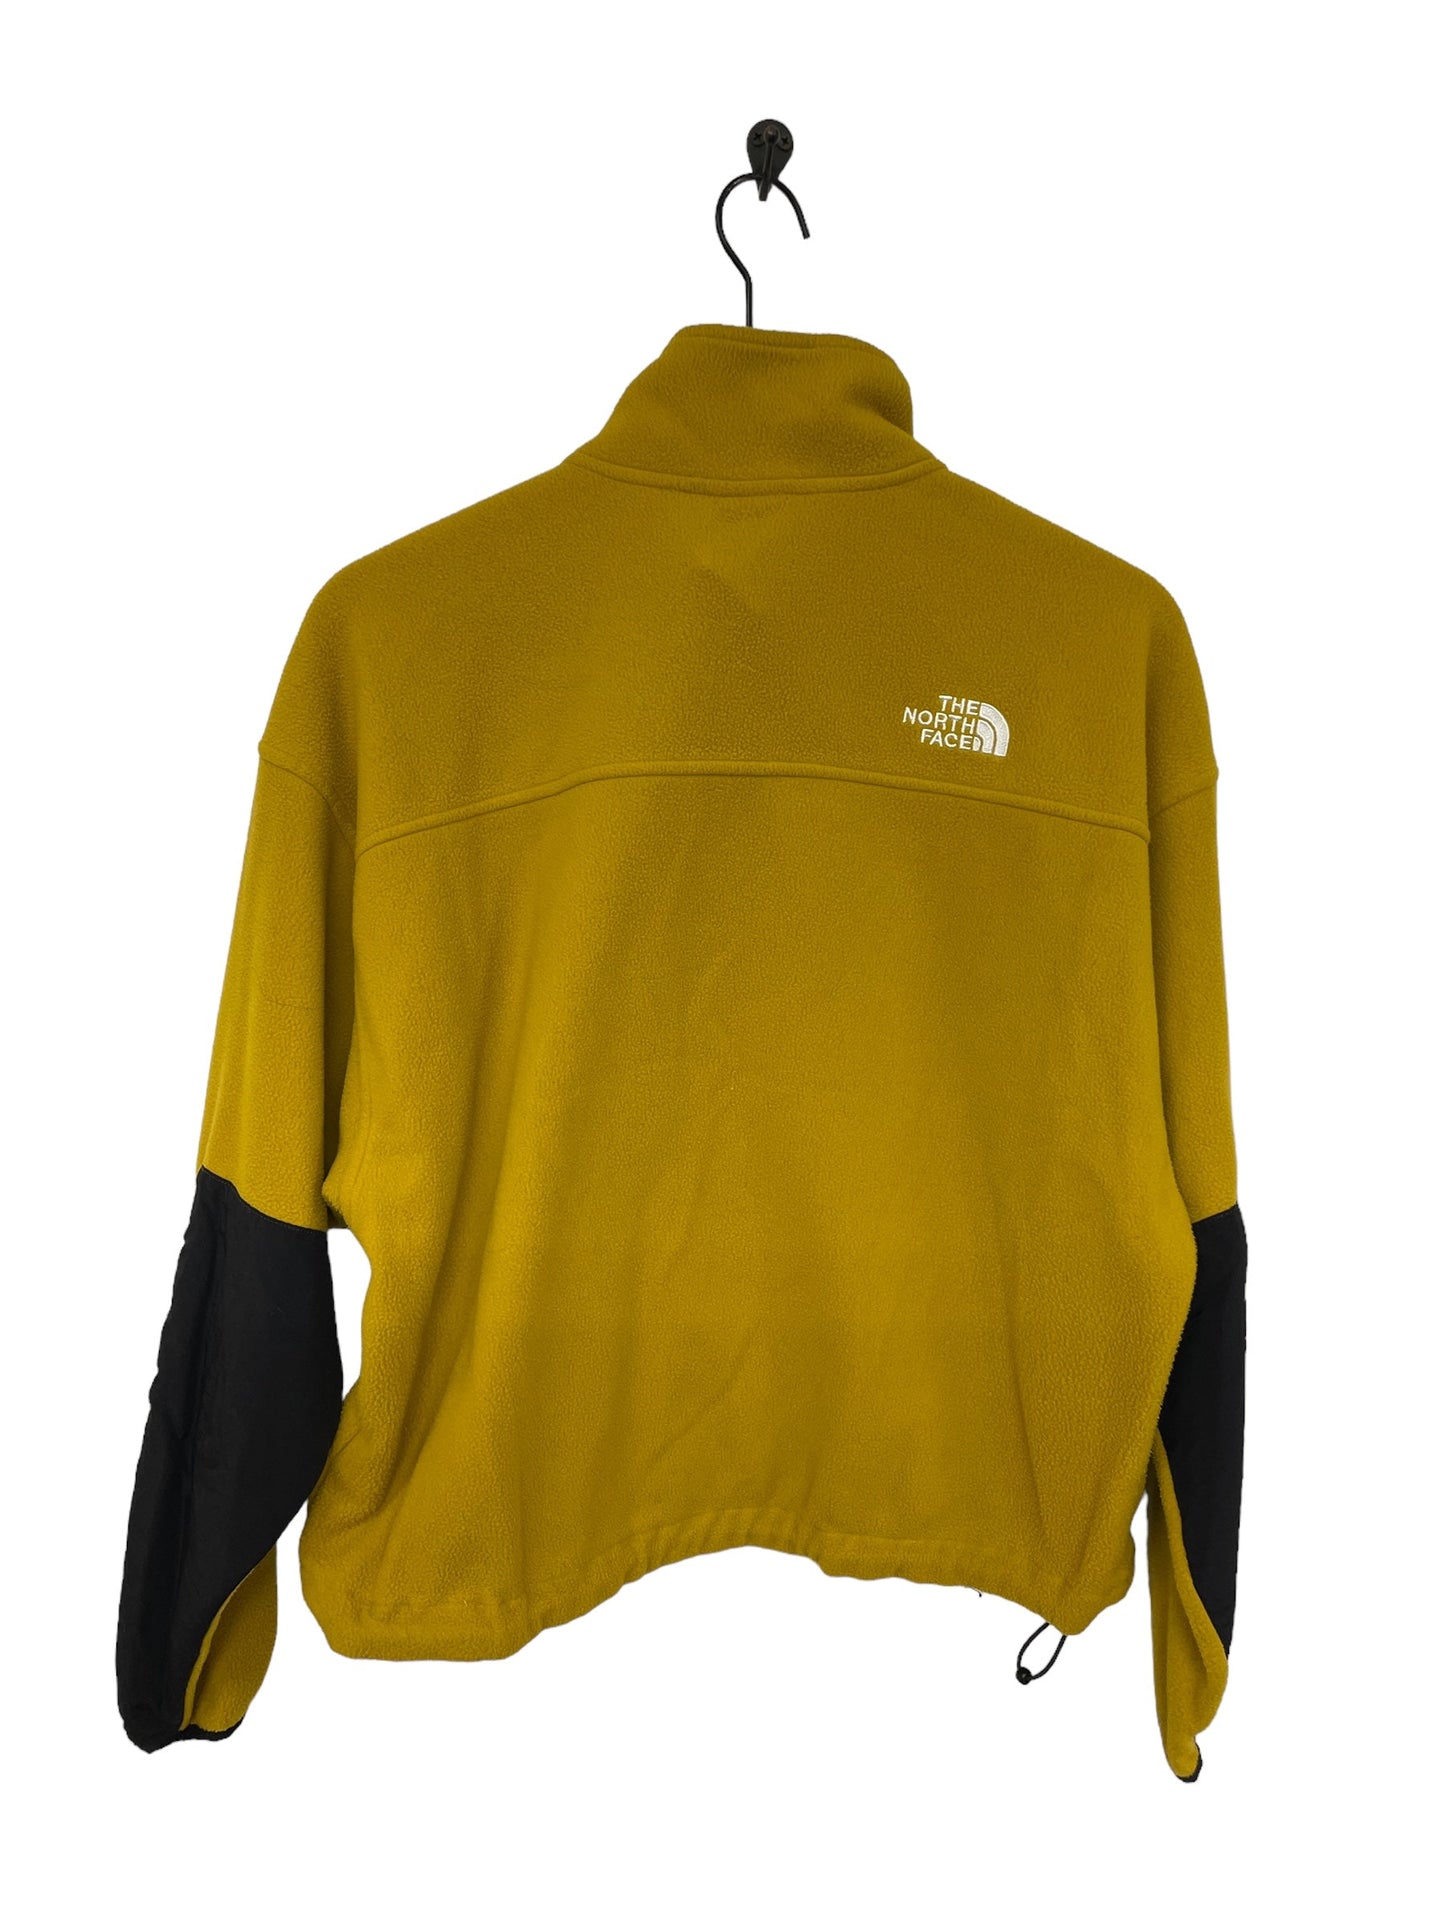 Yellow Sweatshirt Collar The North Face, Size M